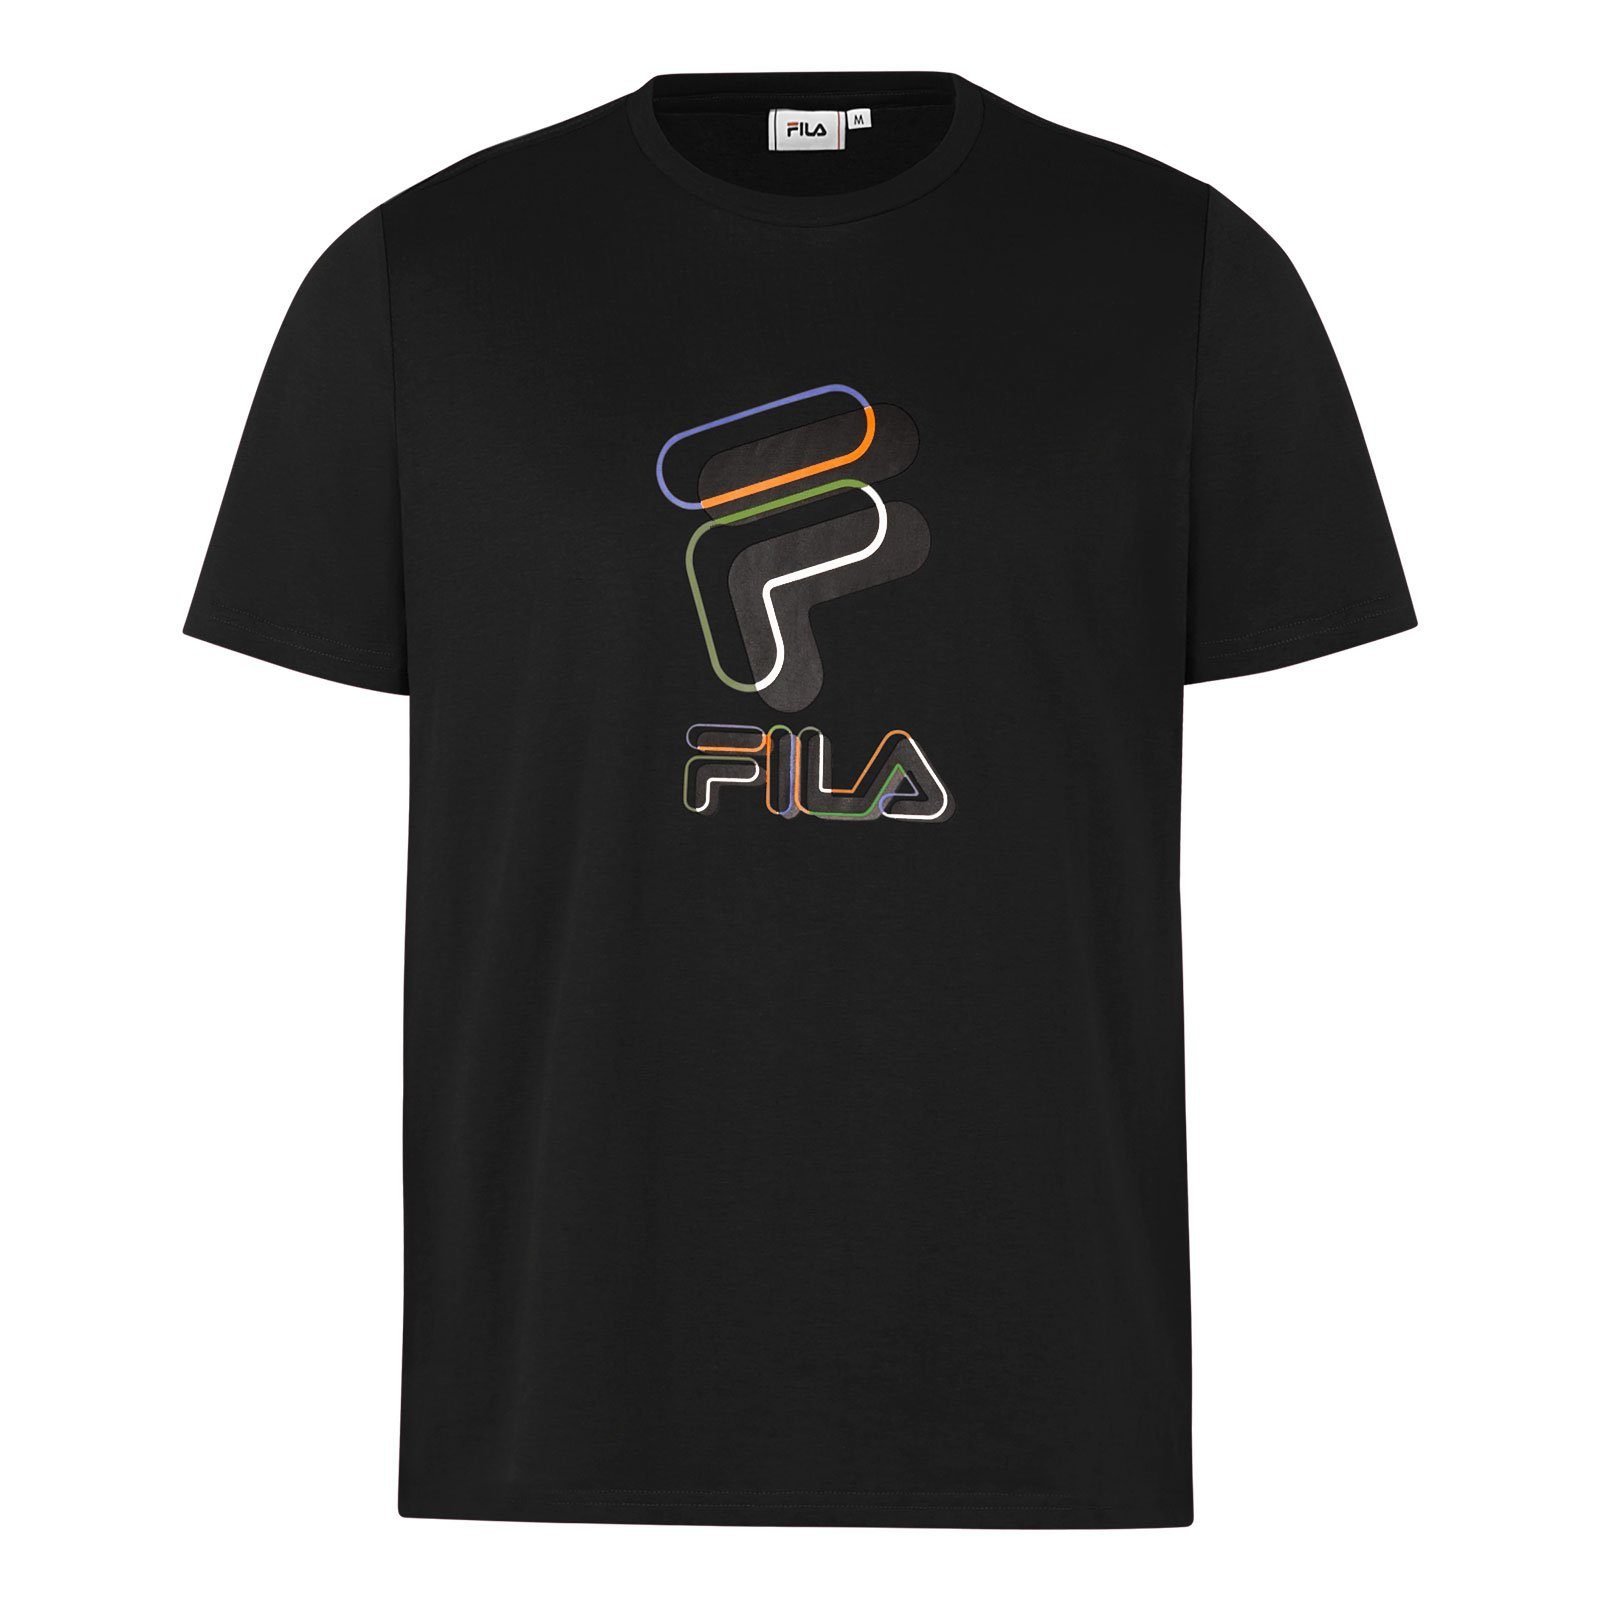 Fila T-Shirt Bibbiena Tee mit stylischem Outline-FILA-Logo 80001 moonless night